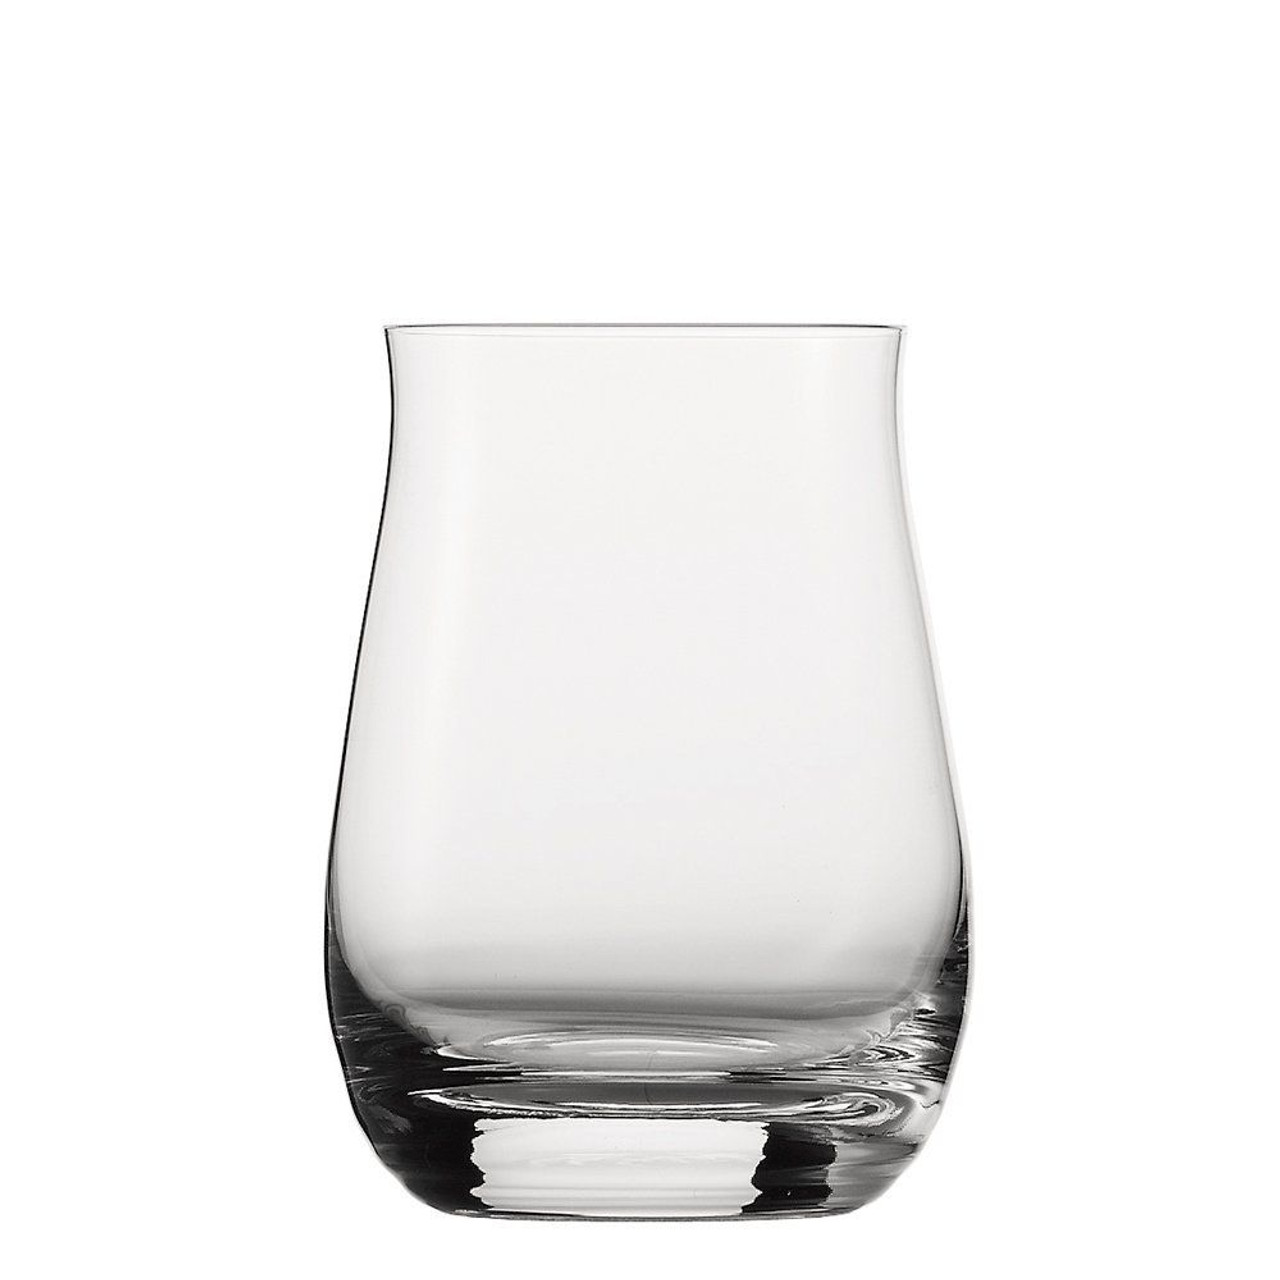 Premium Photo  Whiskey bourbon on ice served in decorative glasses.